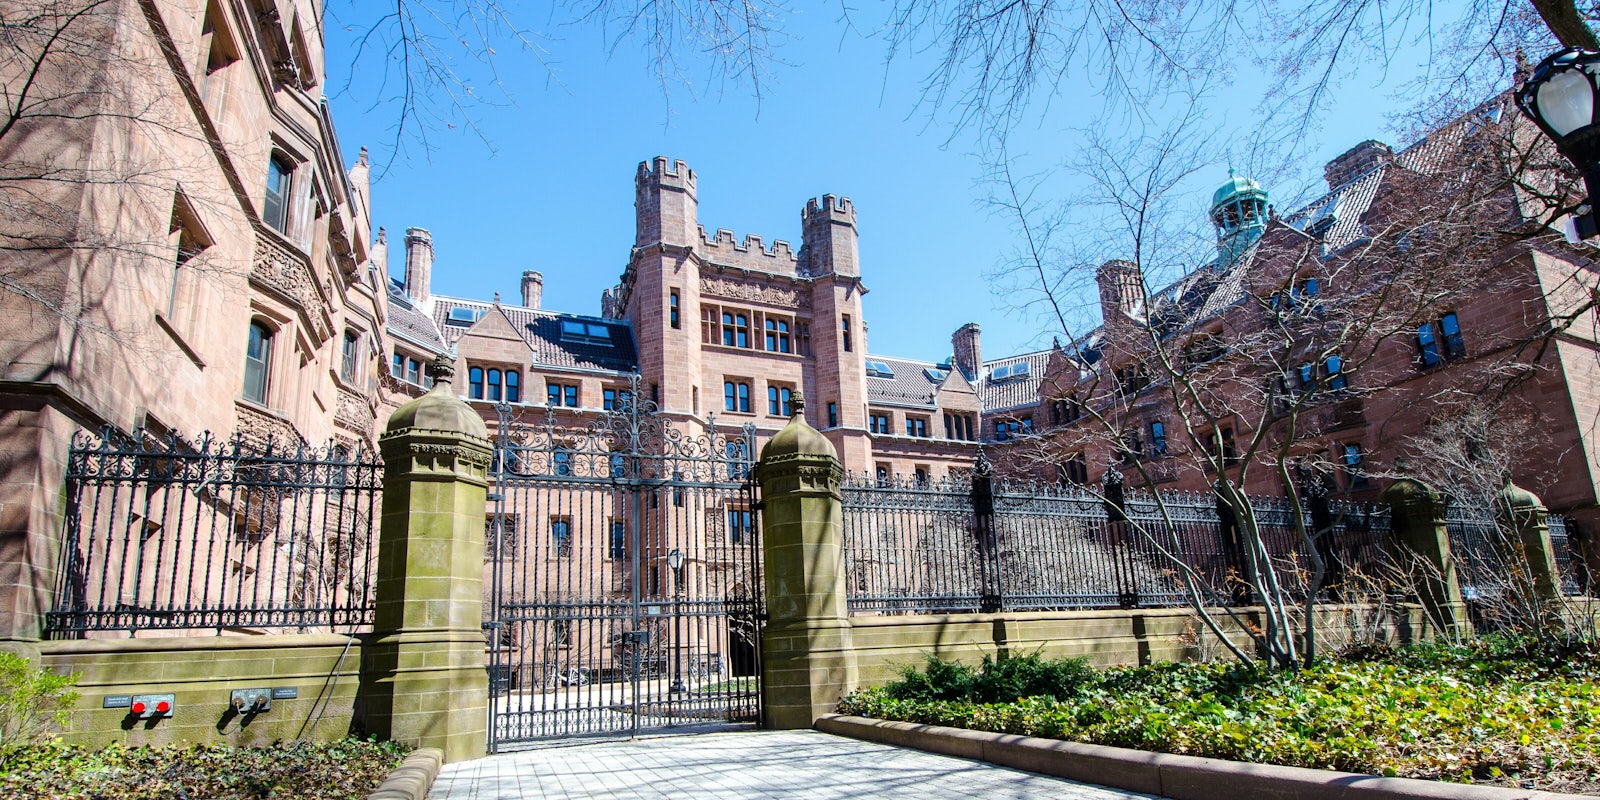 A doctoral student believes Yale University discriminates against men.